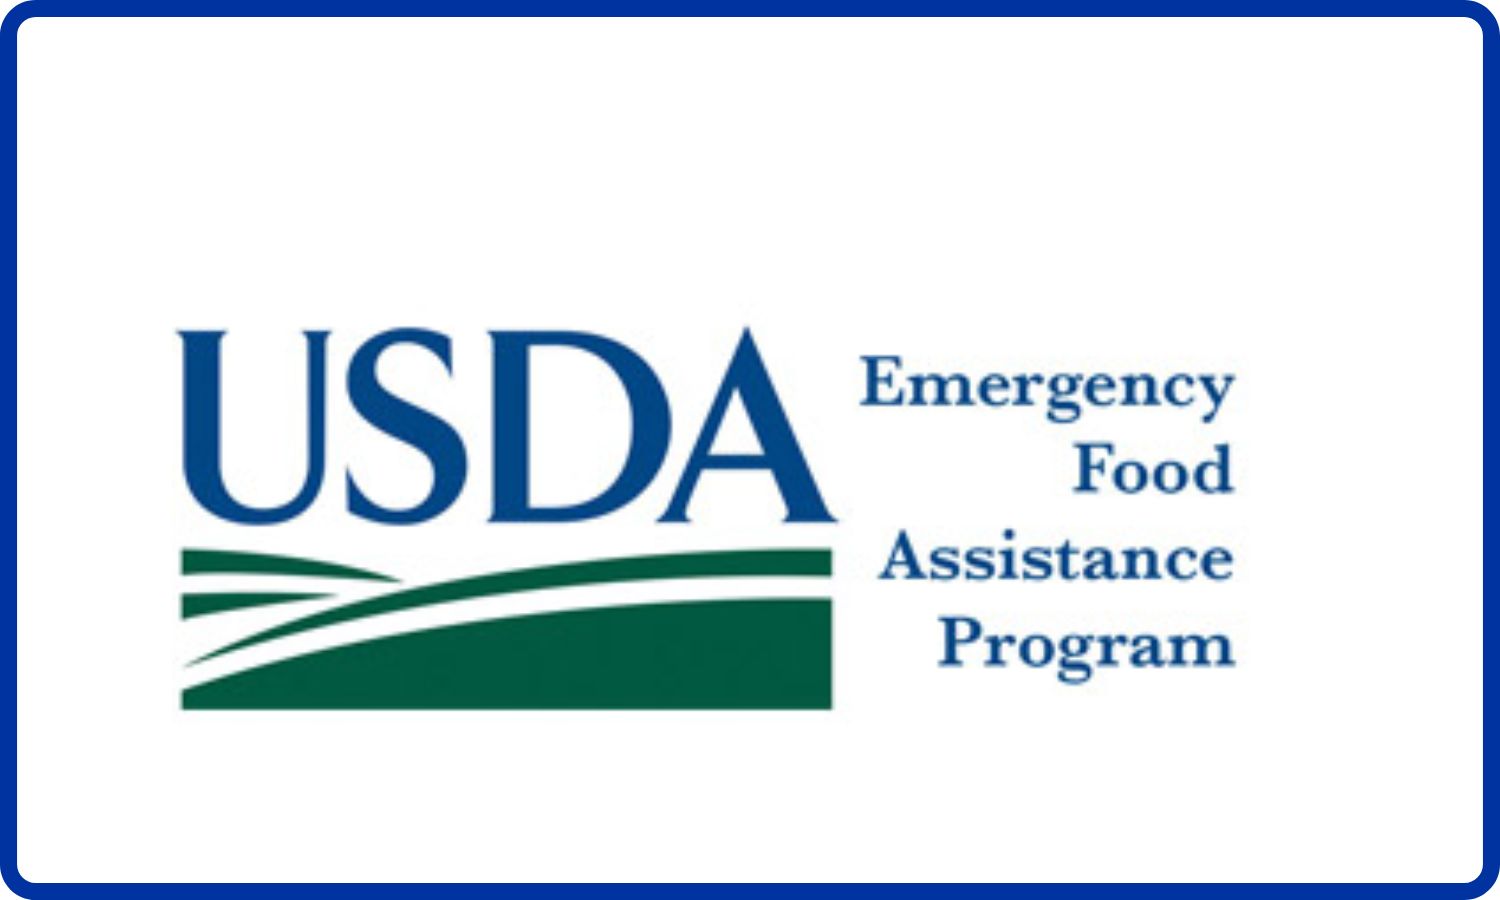 Emergency food assistance program logo